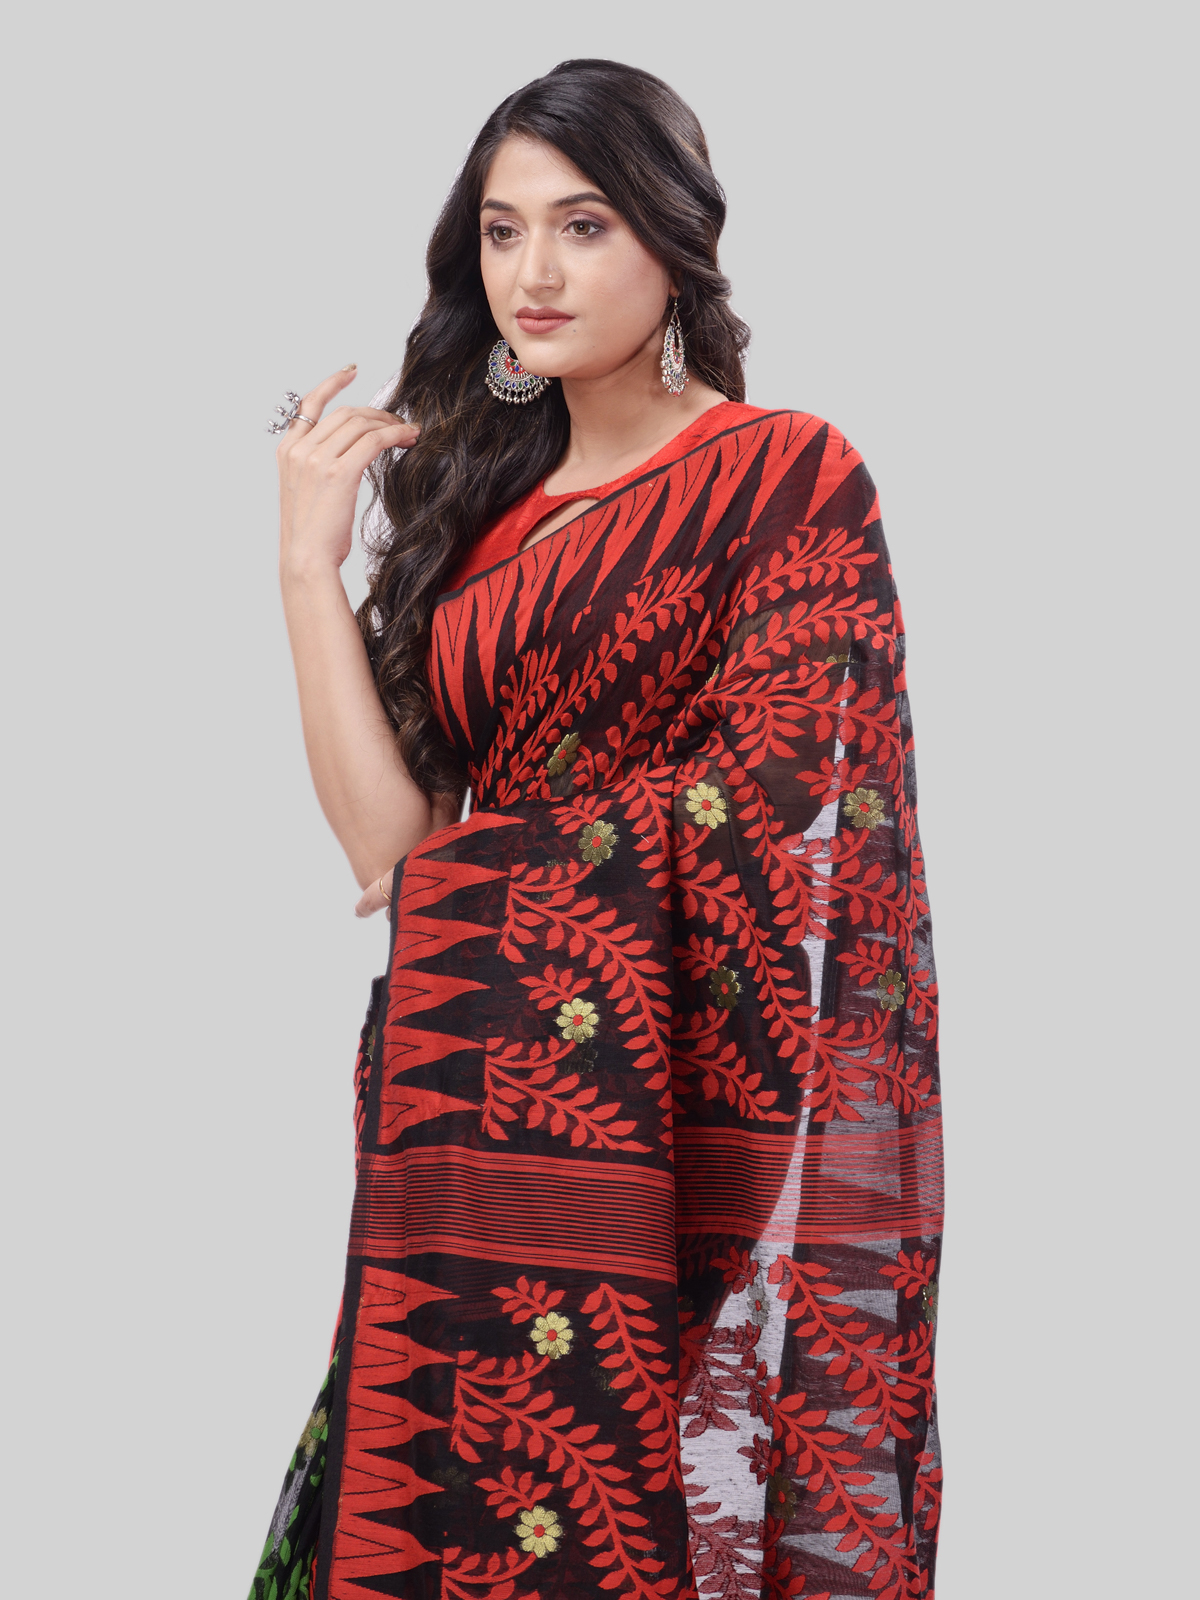 DESH BIDESH Women`s Tamarind Leaf Resham Dhakai Jamdani Bengal Pure Cotton Handloom Saree Whole Body Design without Blouse Piece(Red Green)